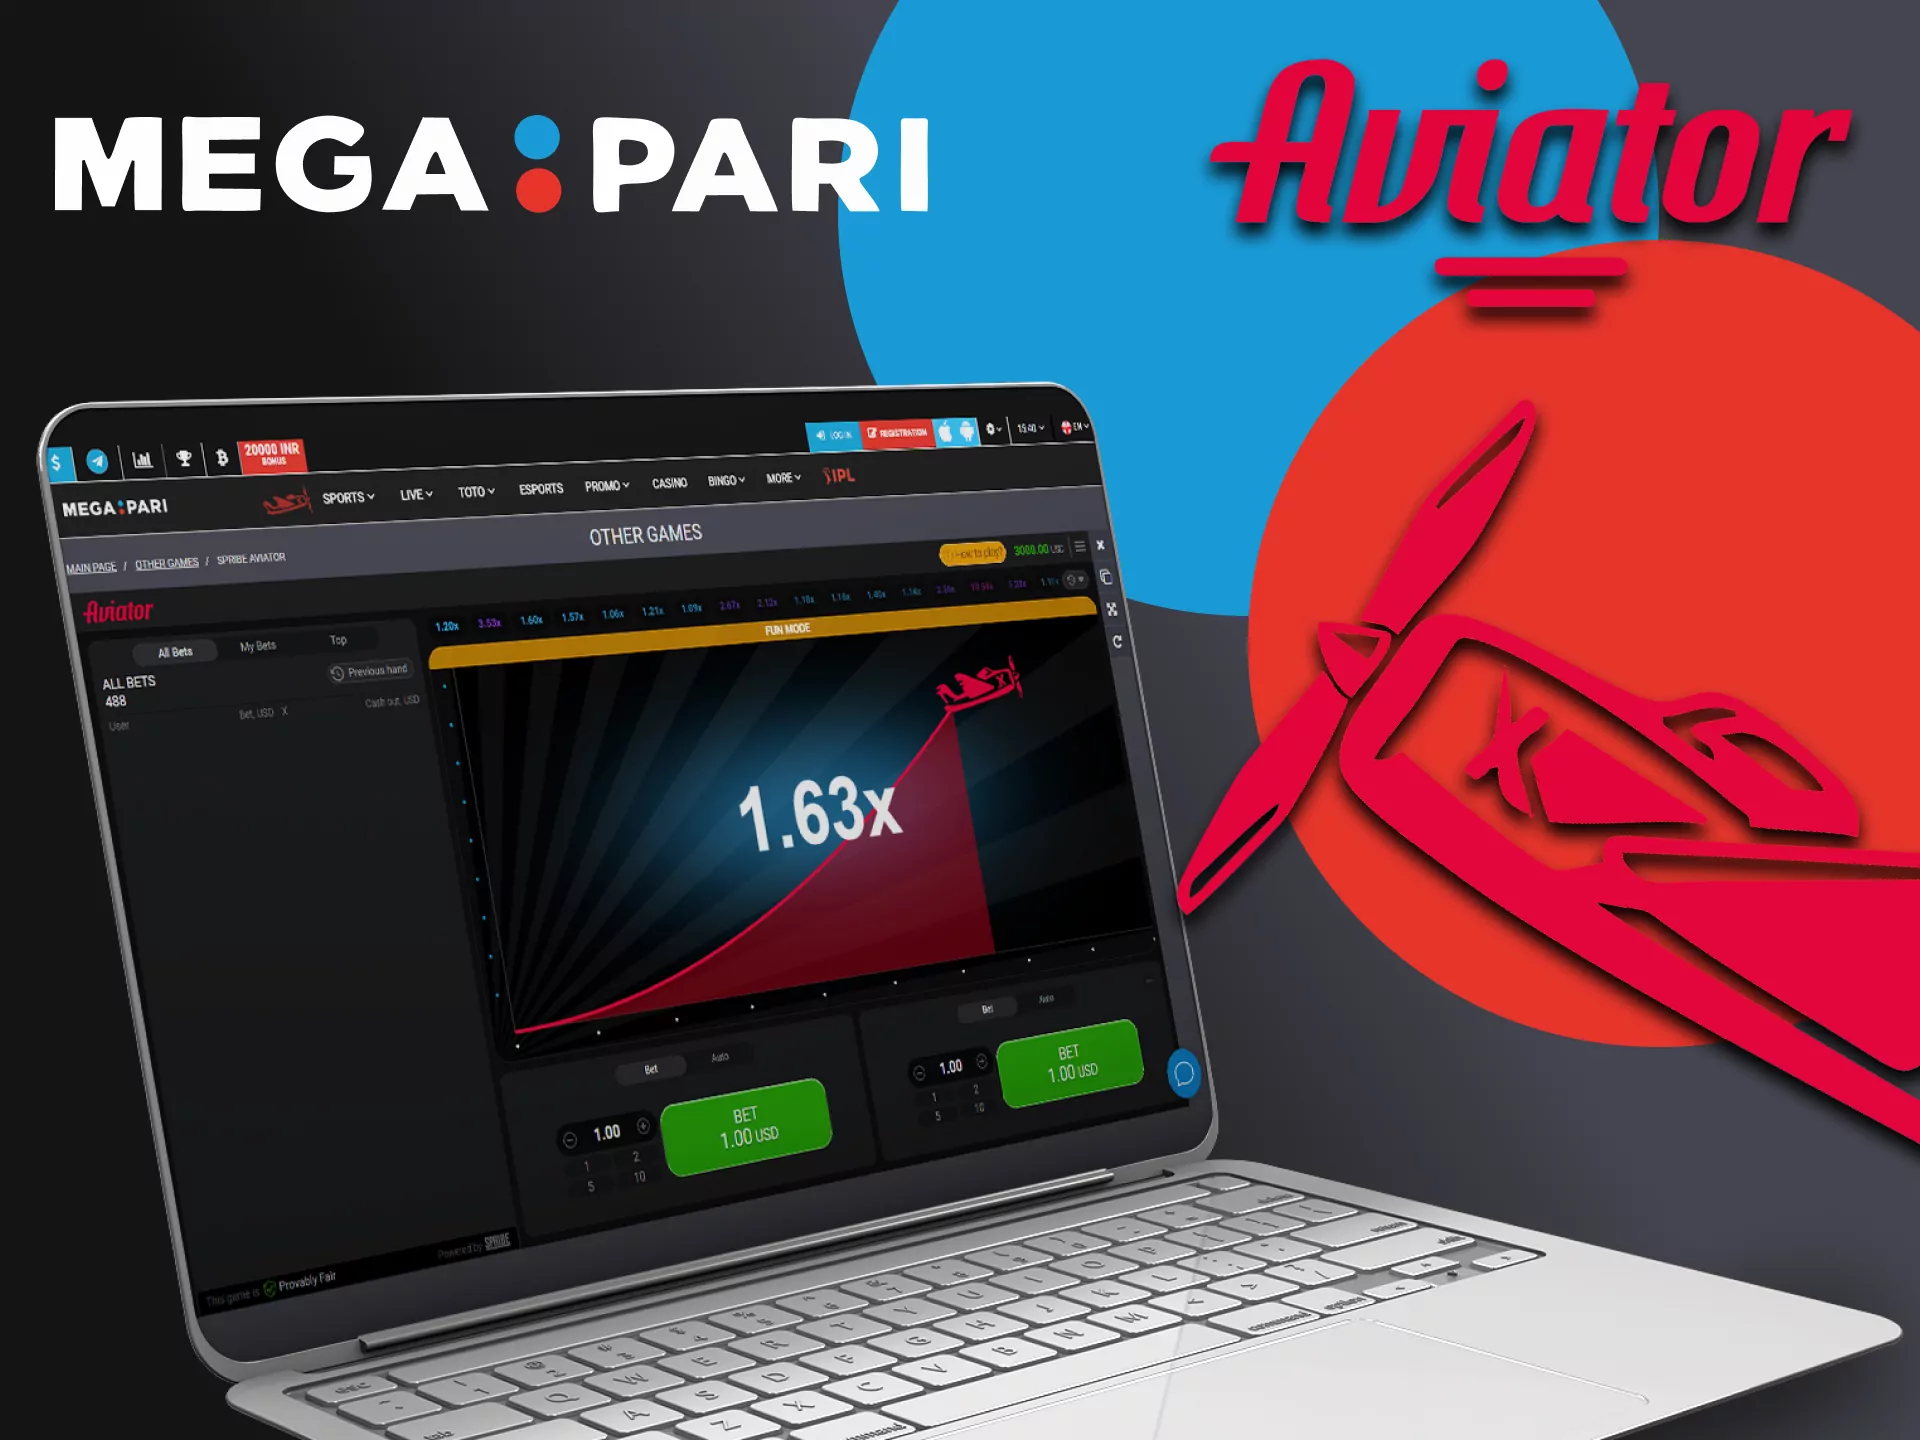 Choose the Aviator game on the Megapari website.